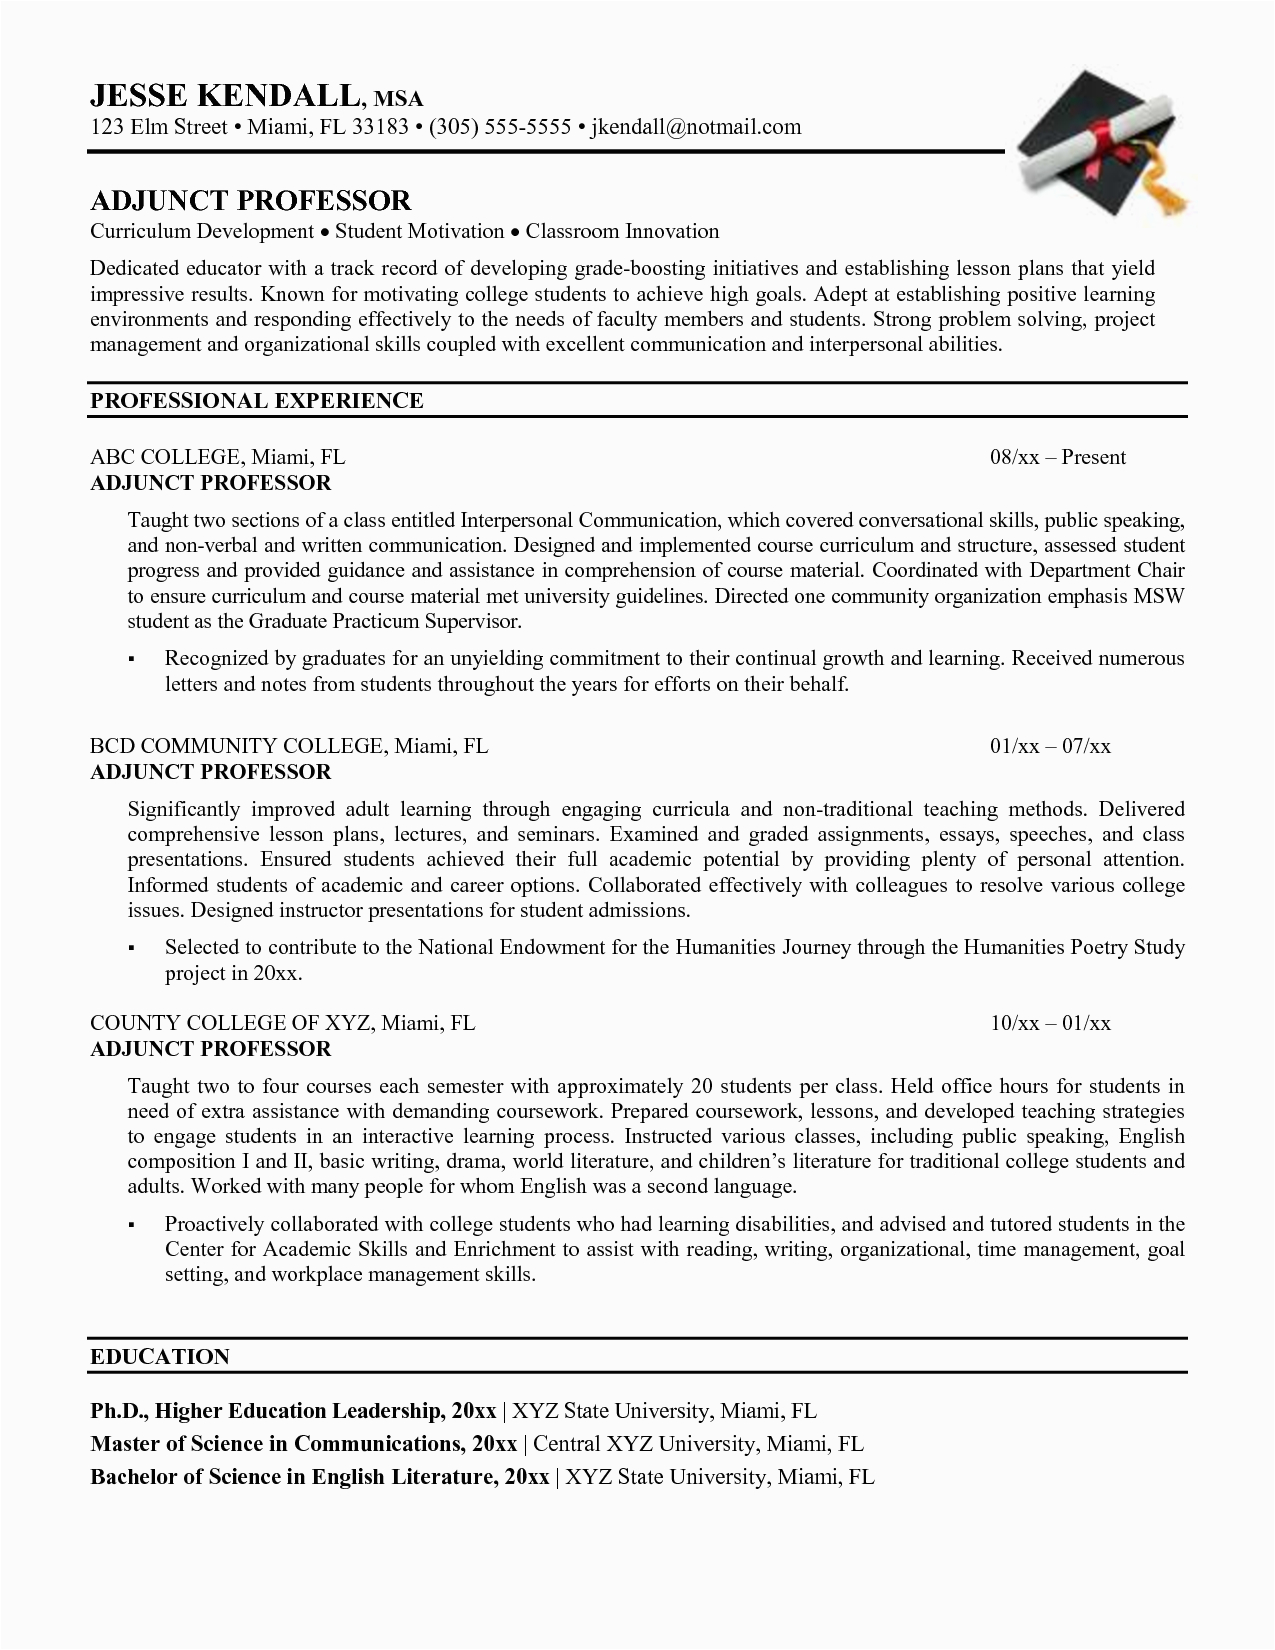 Sample Resume for College Professor Position Adjunct Professor Resume Best Template Collection